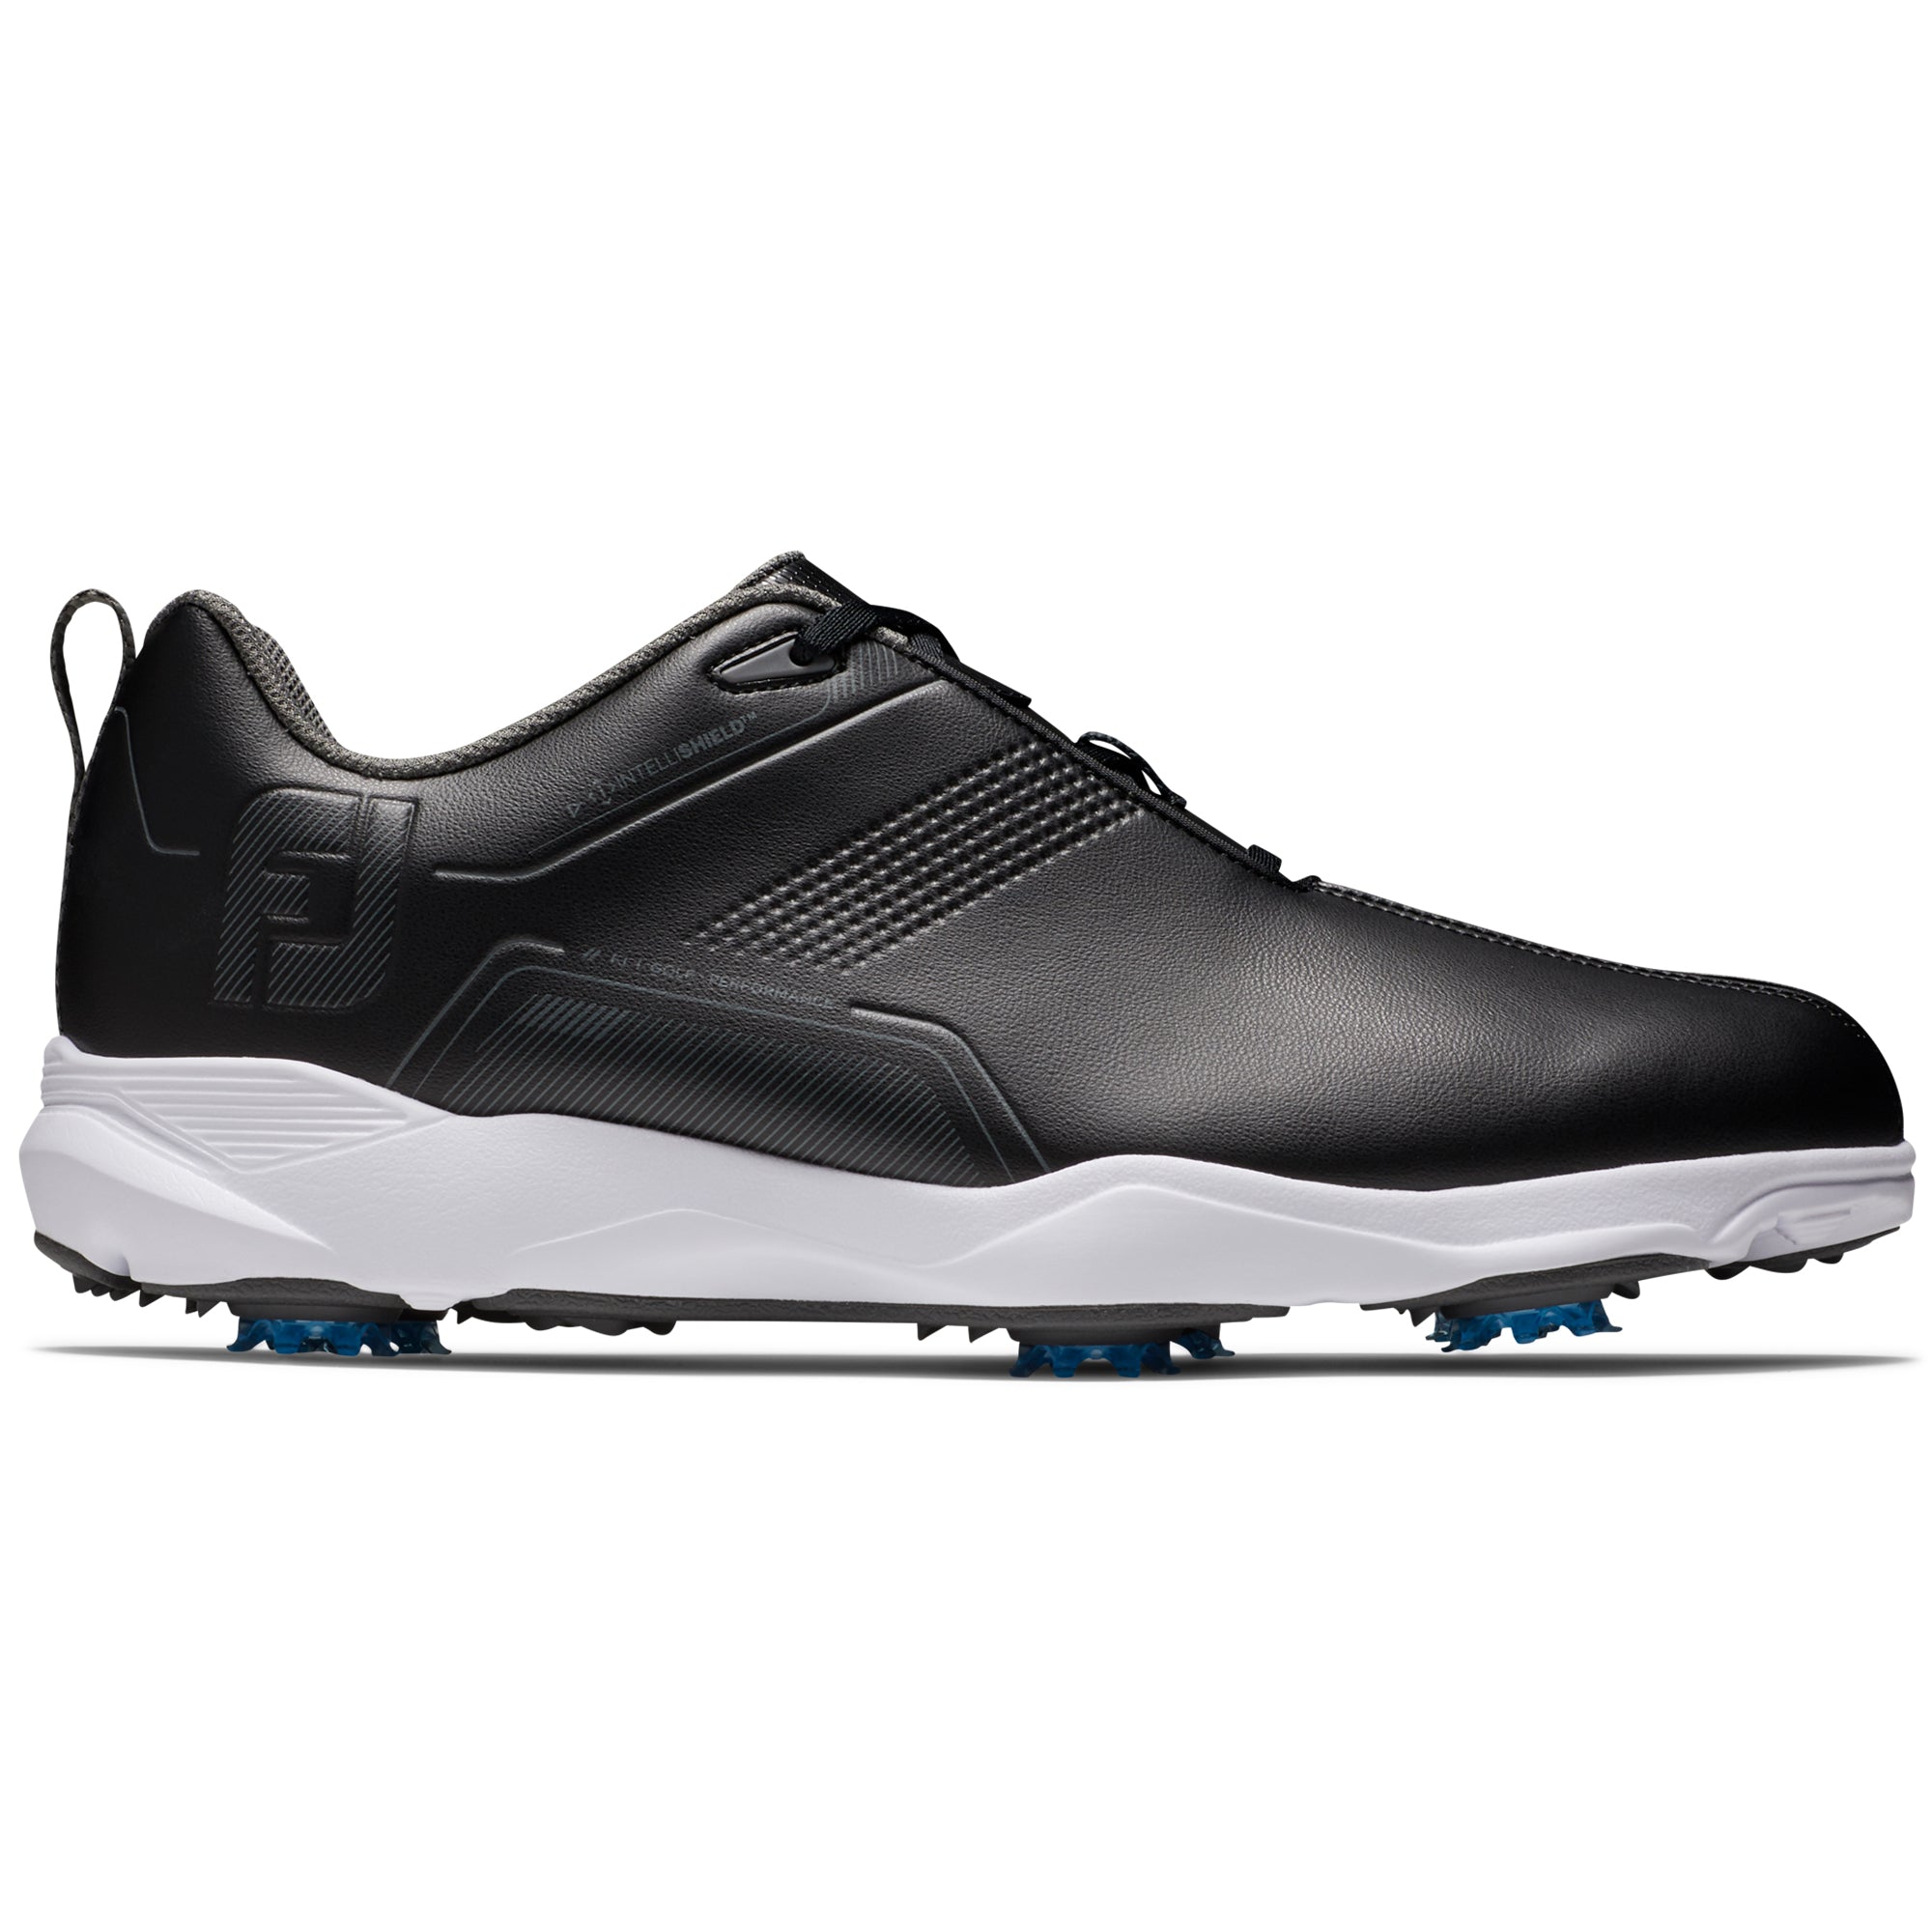 footjoy-ecomfort-golf-shoes-57700-black